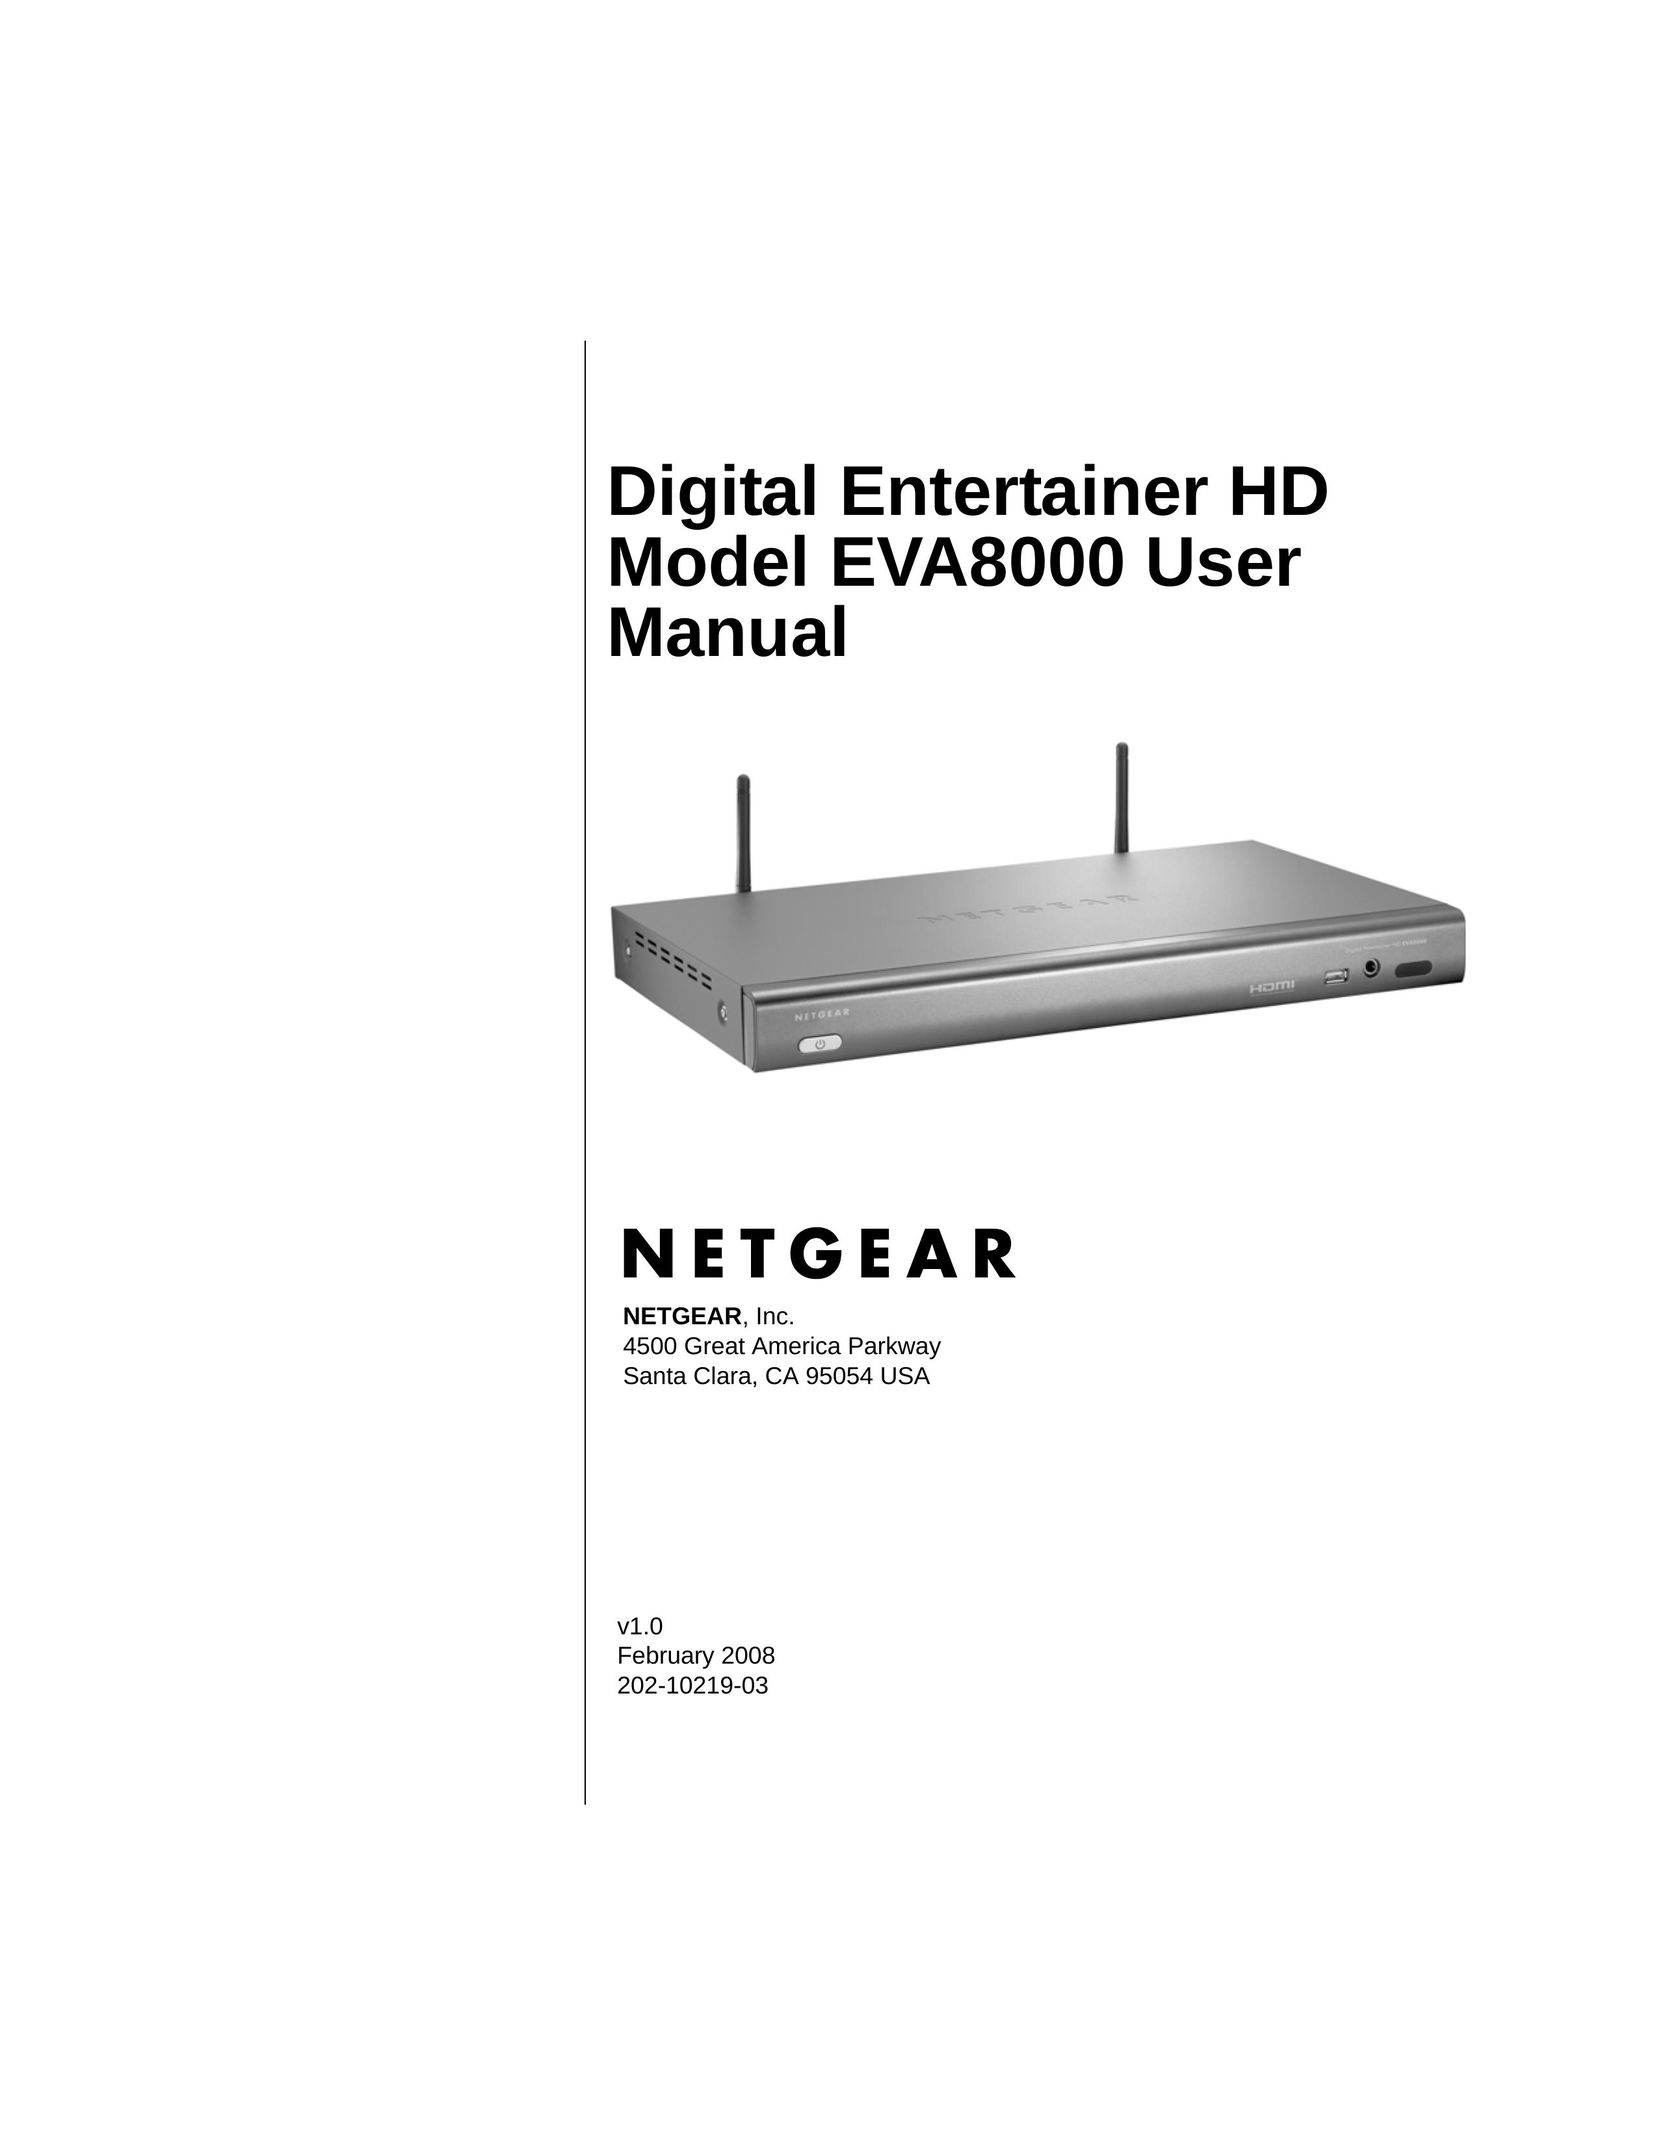 NETGEAR EVA8000 Home Theater Server User Manual